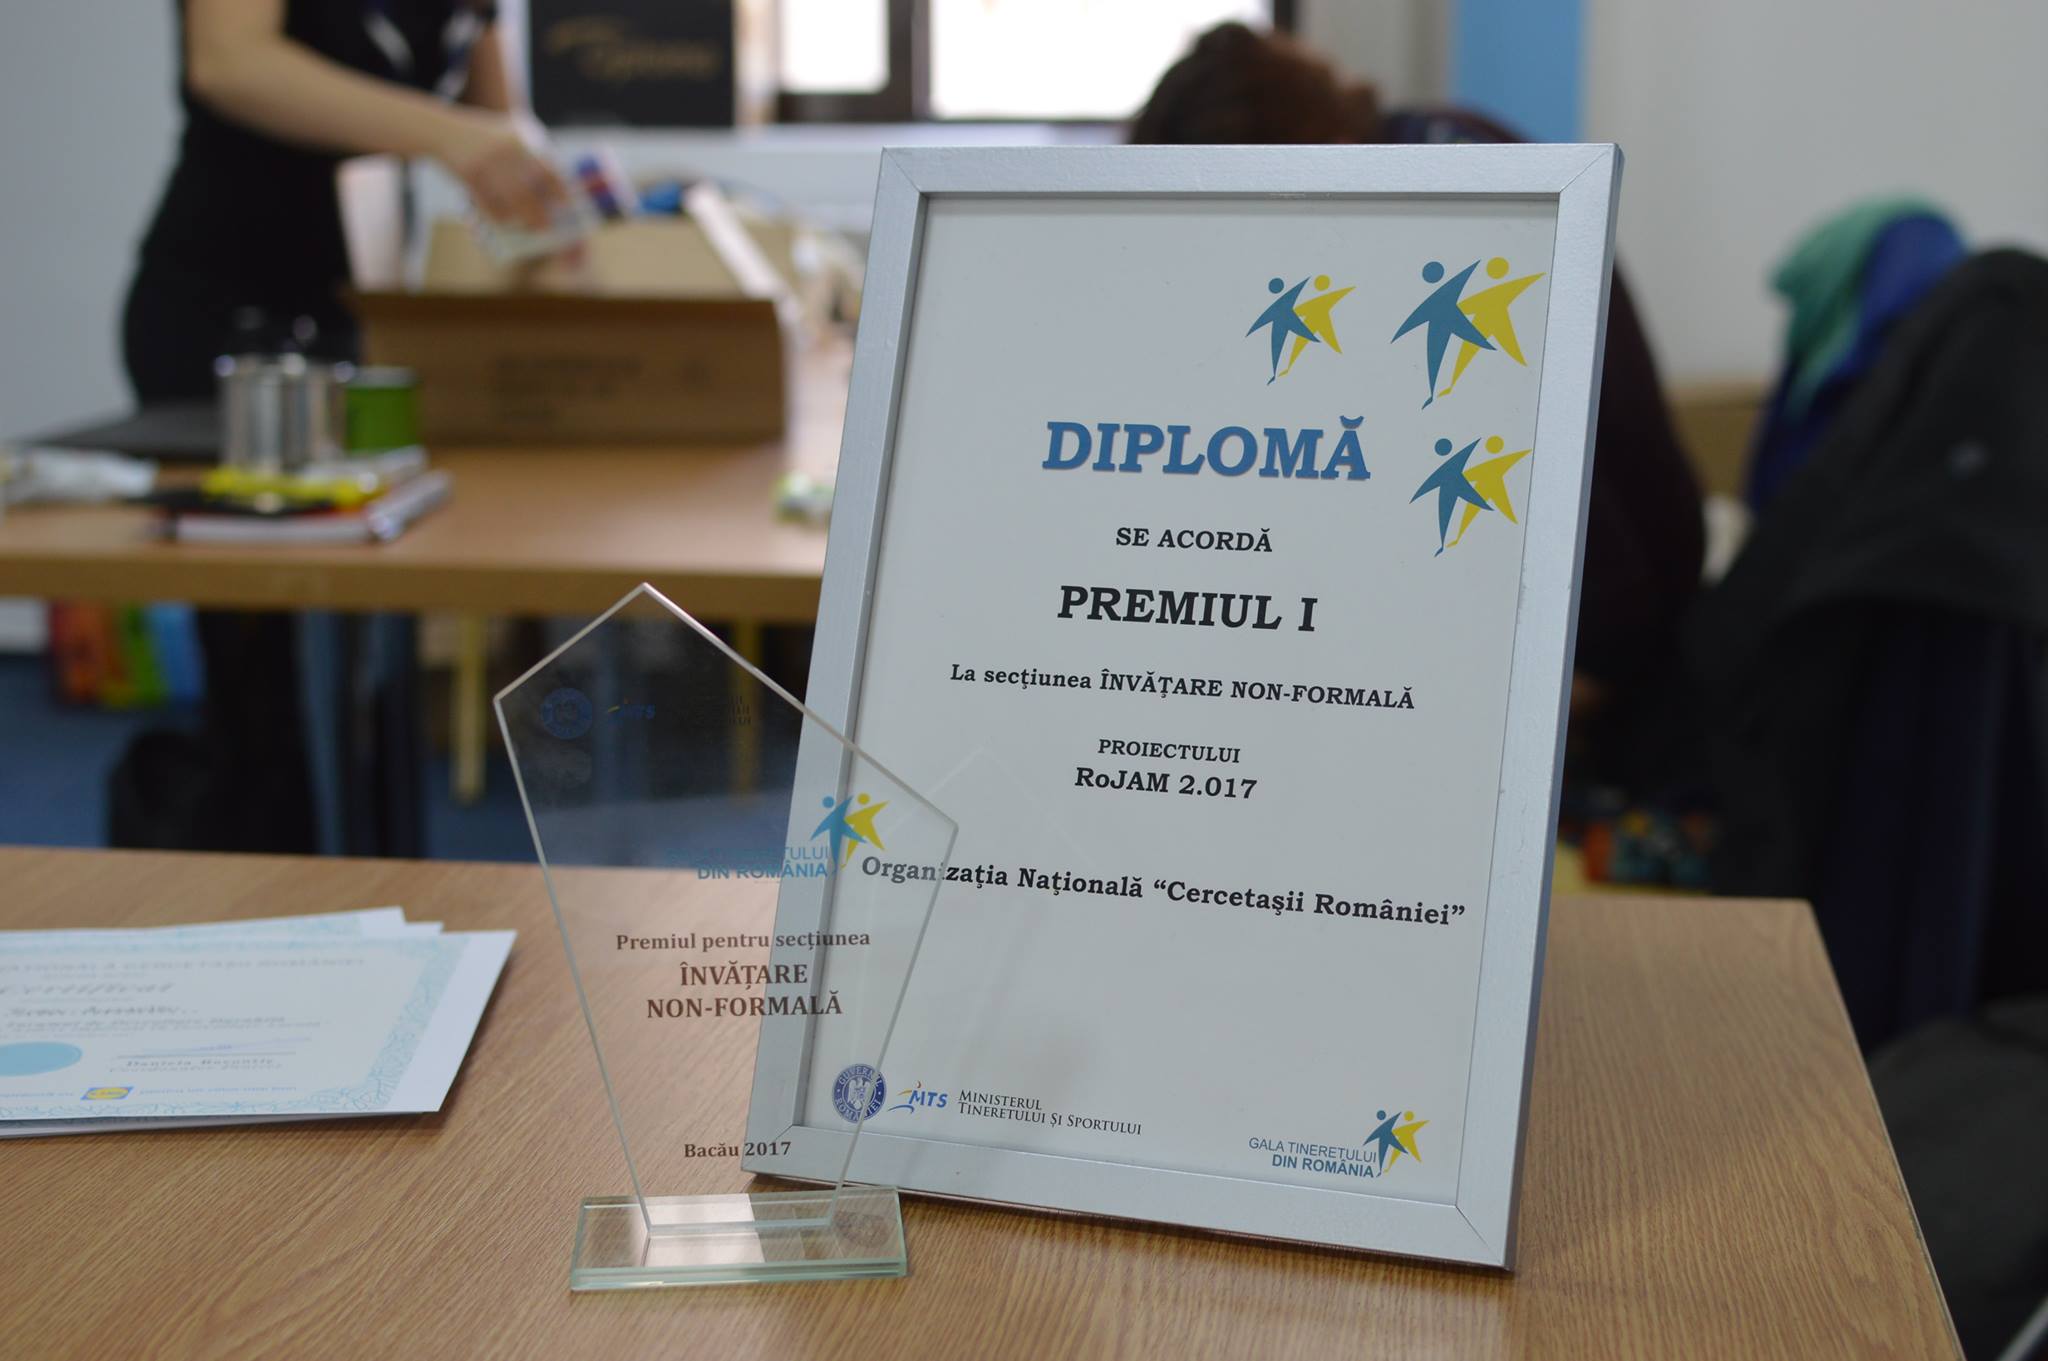 RoJAM 2.0 17 obține Premiul I La Gala Tineretului din România